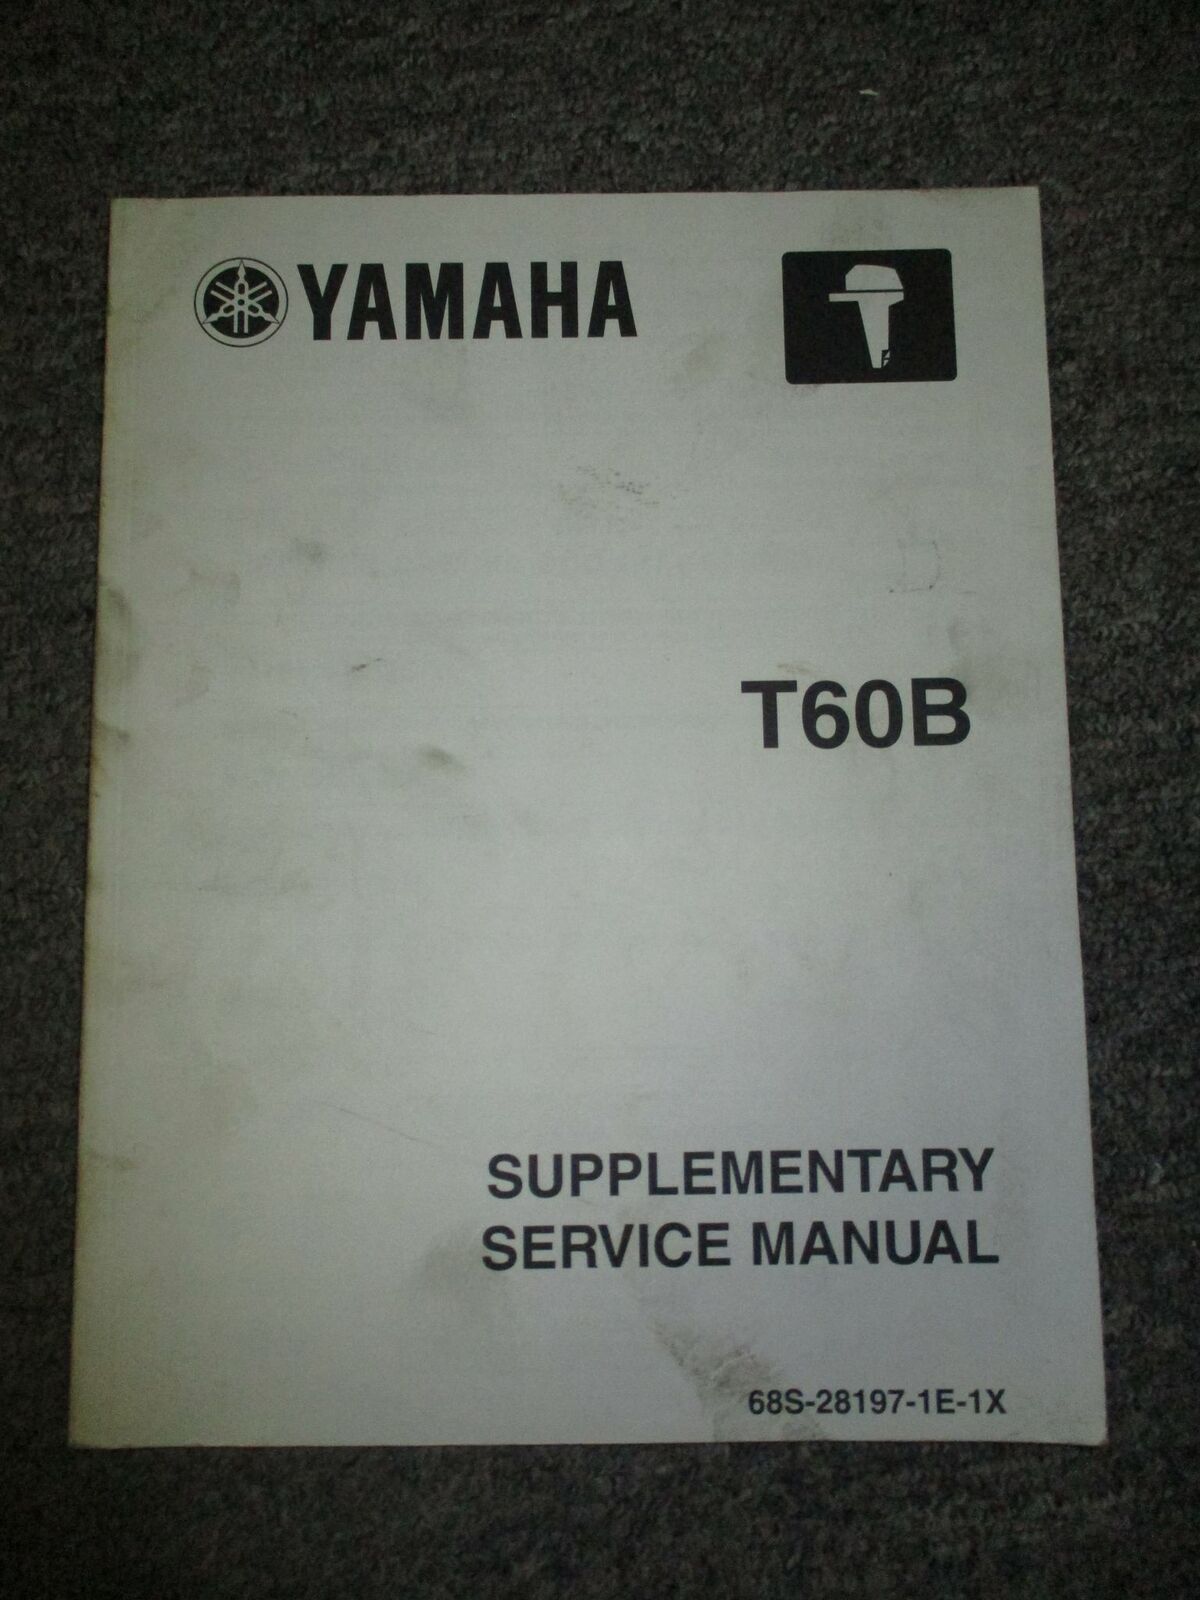 Yamaha T60B Supplementary Service Manual [LIT-18616-02-46]